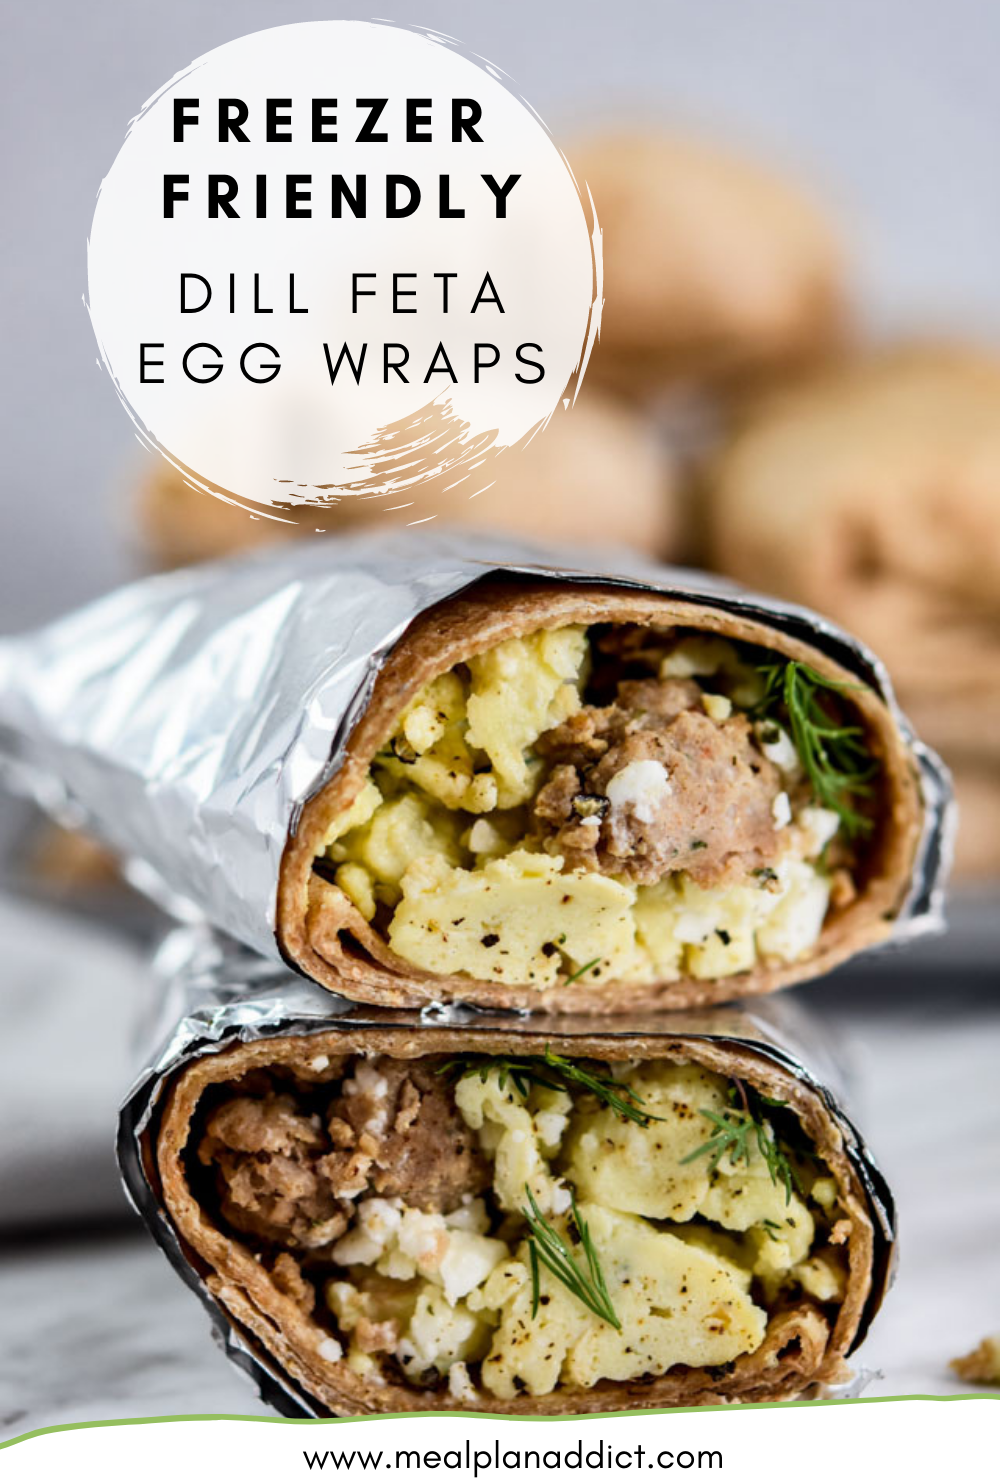 Dill Feta Egg Wraps